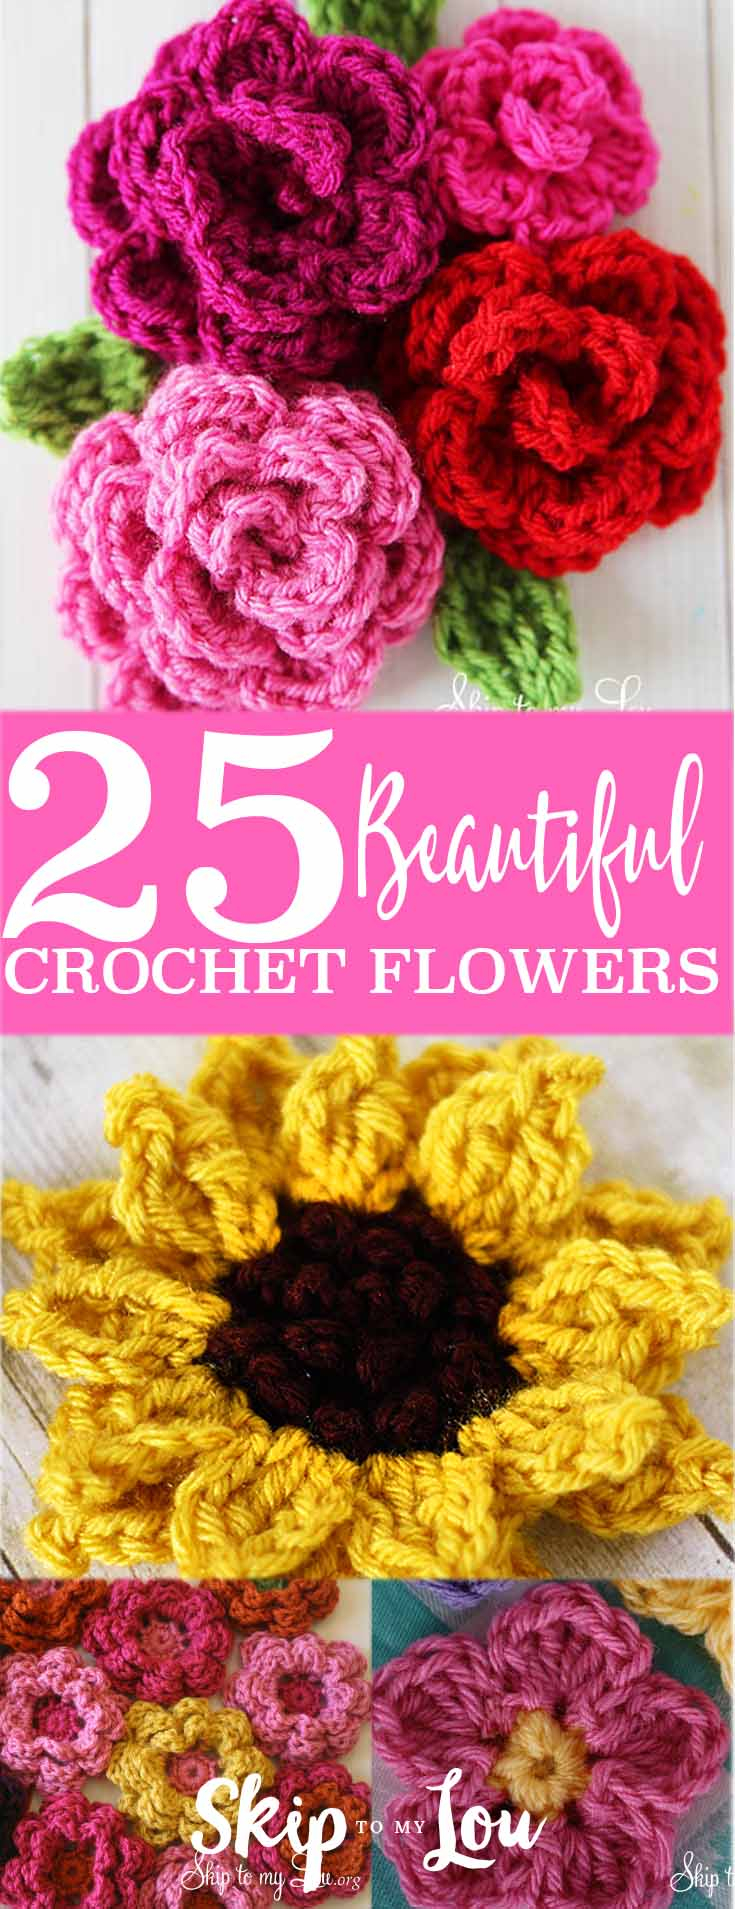 Crochet Sunflower Pattern 10 Beautiful Crochet Flowers To Make Skip To My Lou